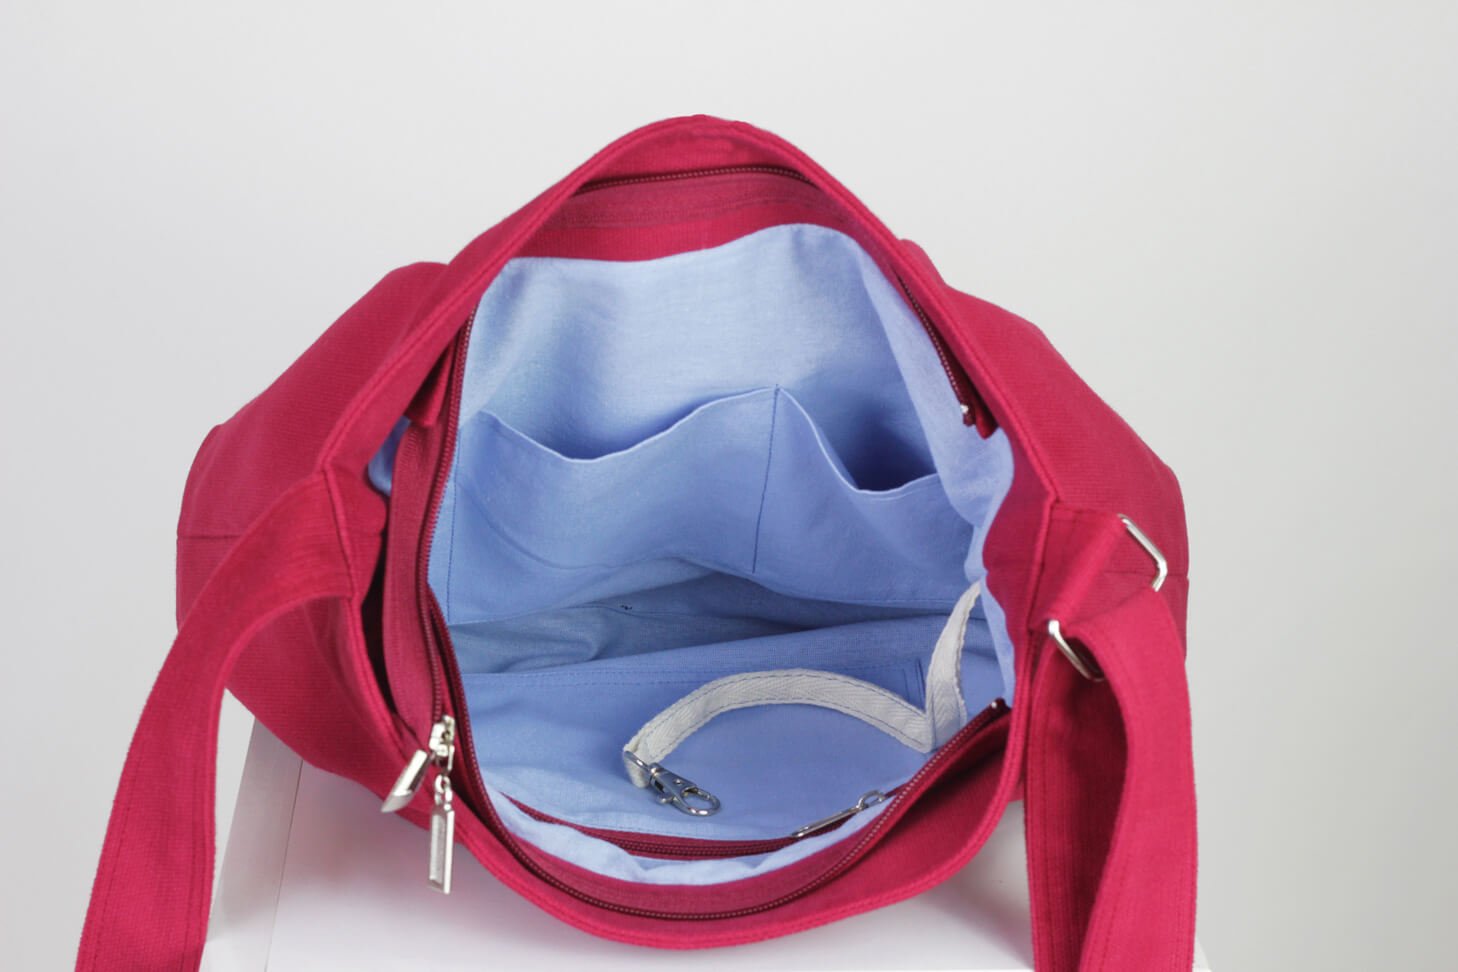  Women Hobo Shoulder Bag Puffer Small Tote Crossbody Bag Purse  Cotton Handmade Bags Handbag with Zipper School Work Travel Beige :  Clothing, Shoes & Jewelry